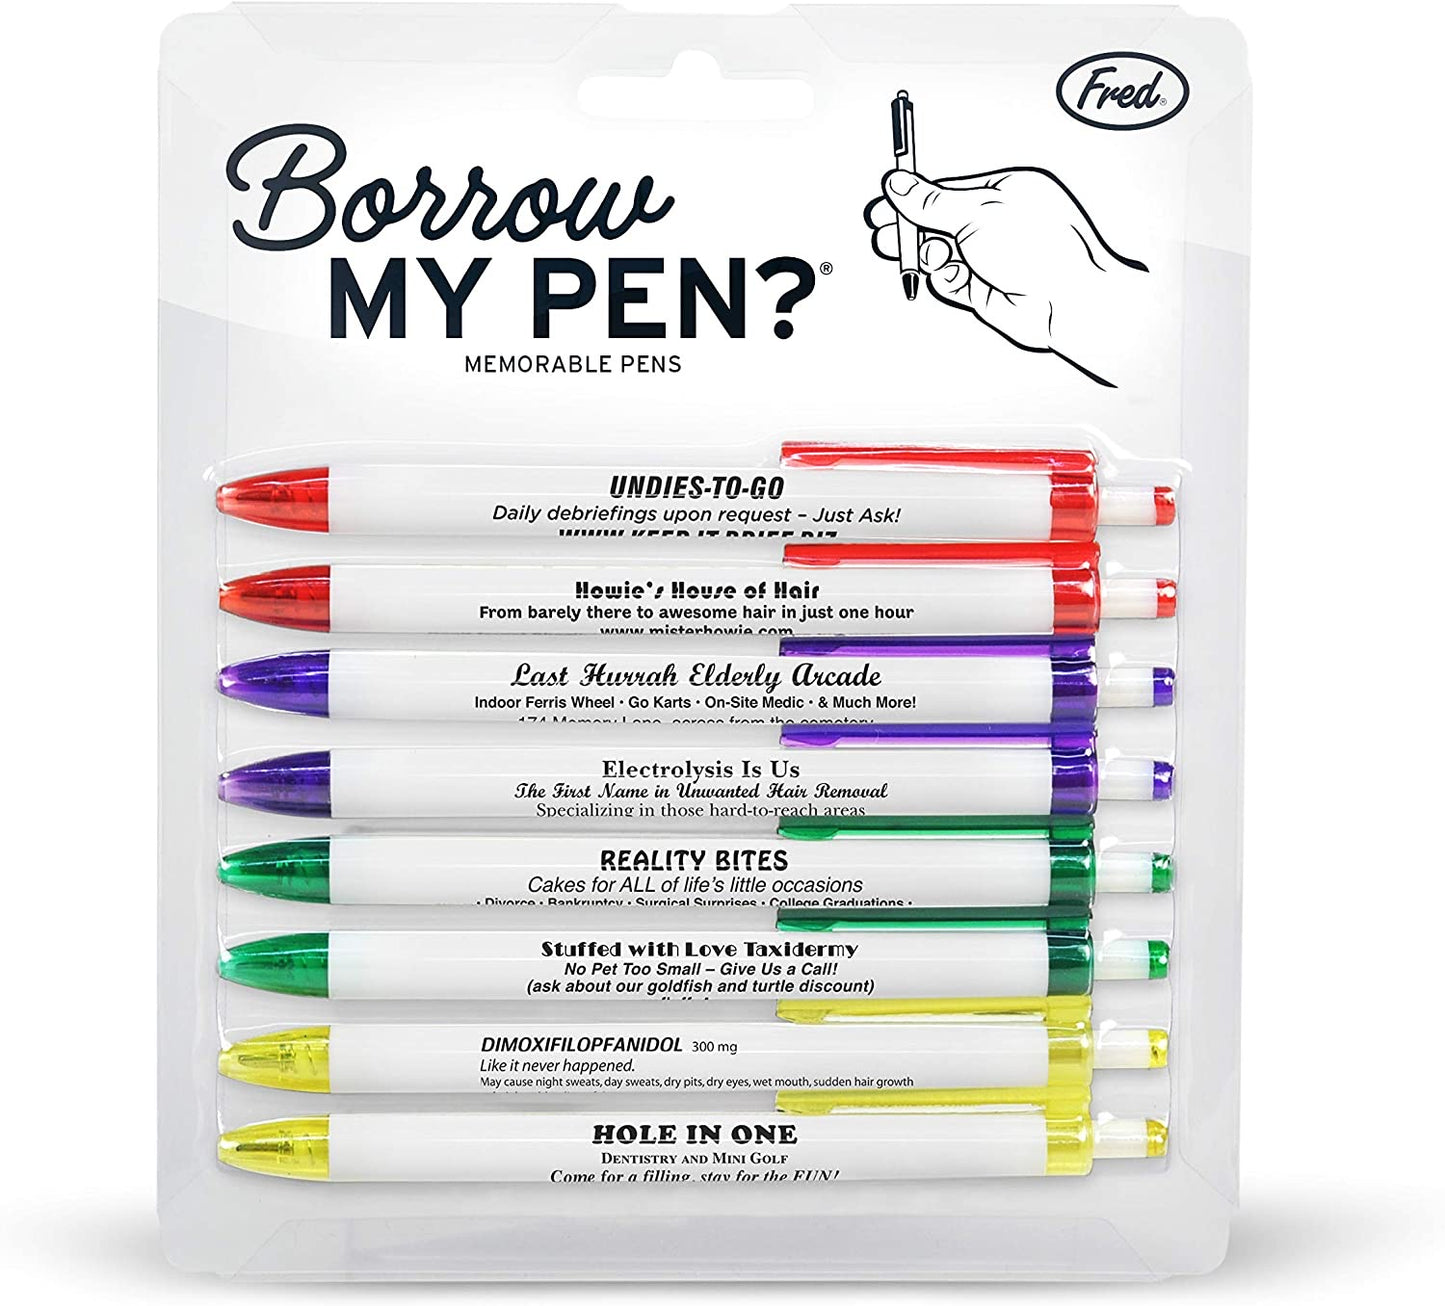 Borrow My Pen "Clean Version"